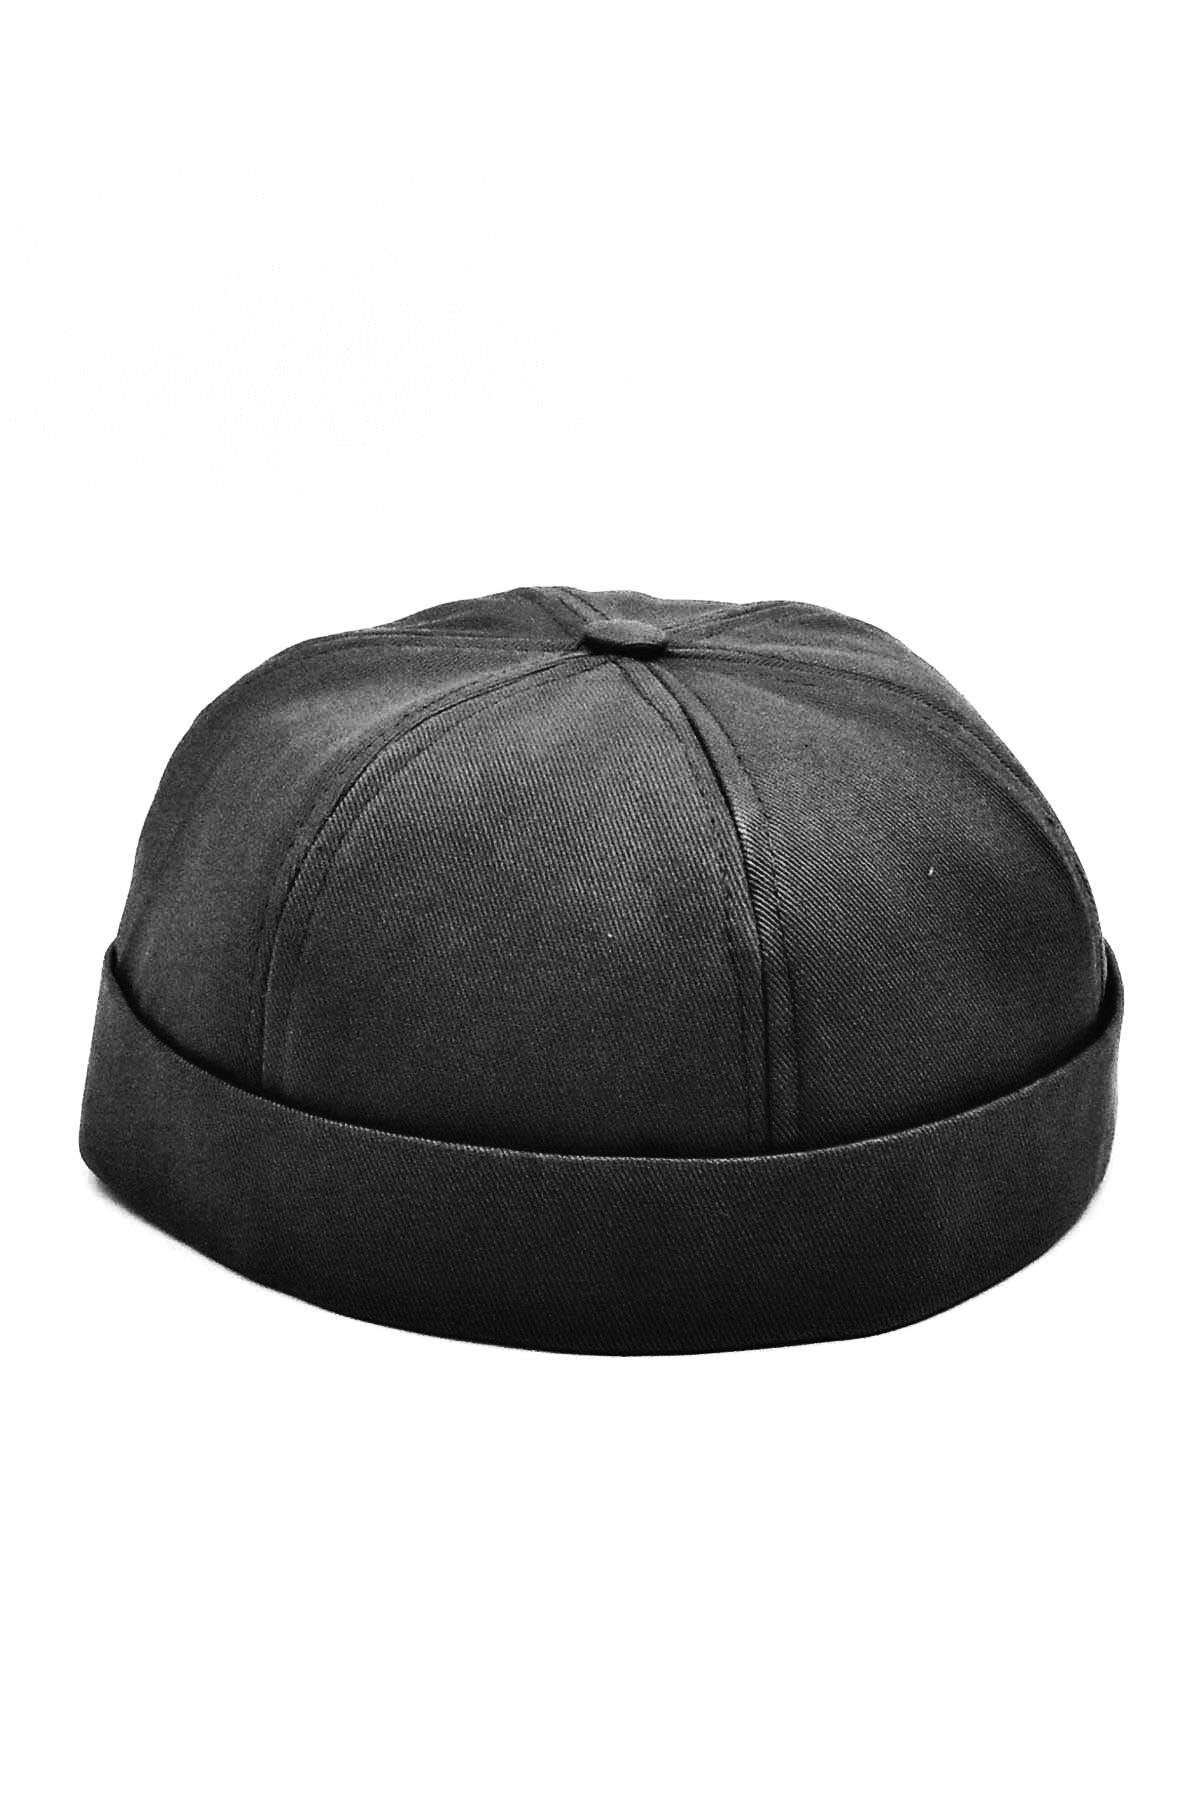 Külah Siyah Hiphop Docker Şapka %100 Pamuk Katlamalı Cap KLH6898